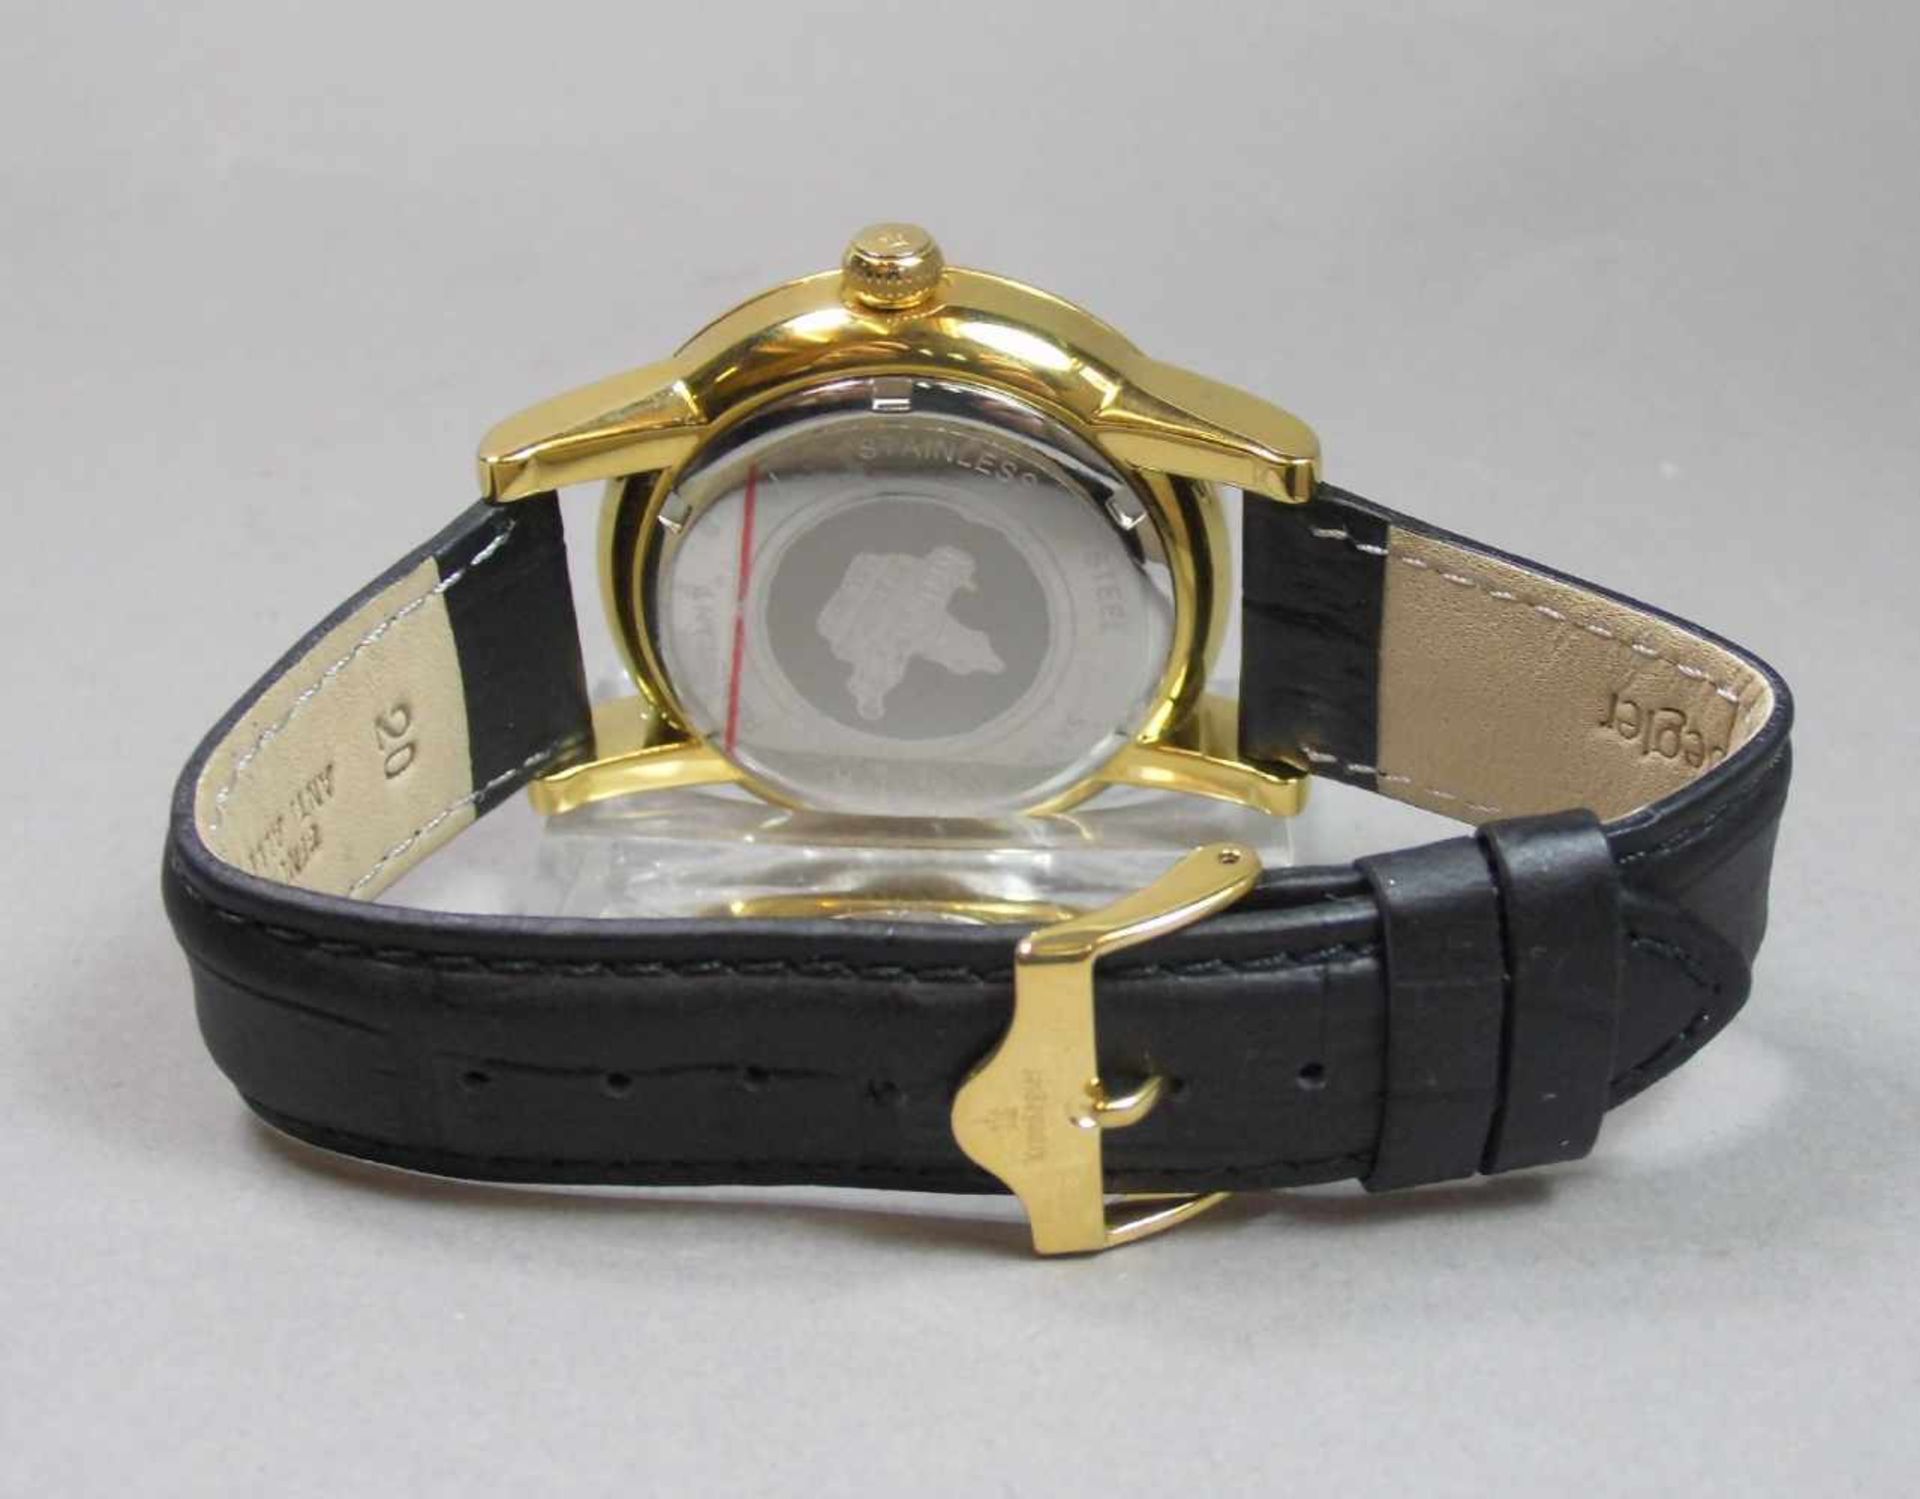 ARMBANDUHR / CHRONOGRAPH / wristwatch, Quartz-Uhr, Manufaktur Kronsegler GmbH / Glashütte - Sachsen, - Image 4 of 5